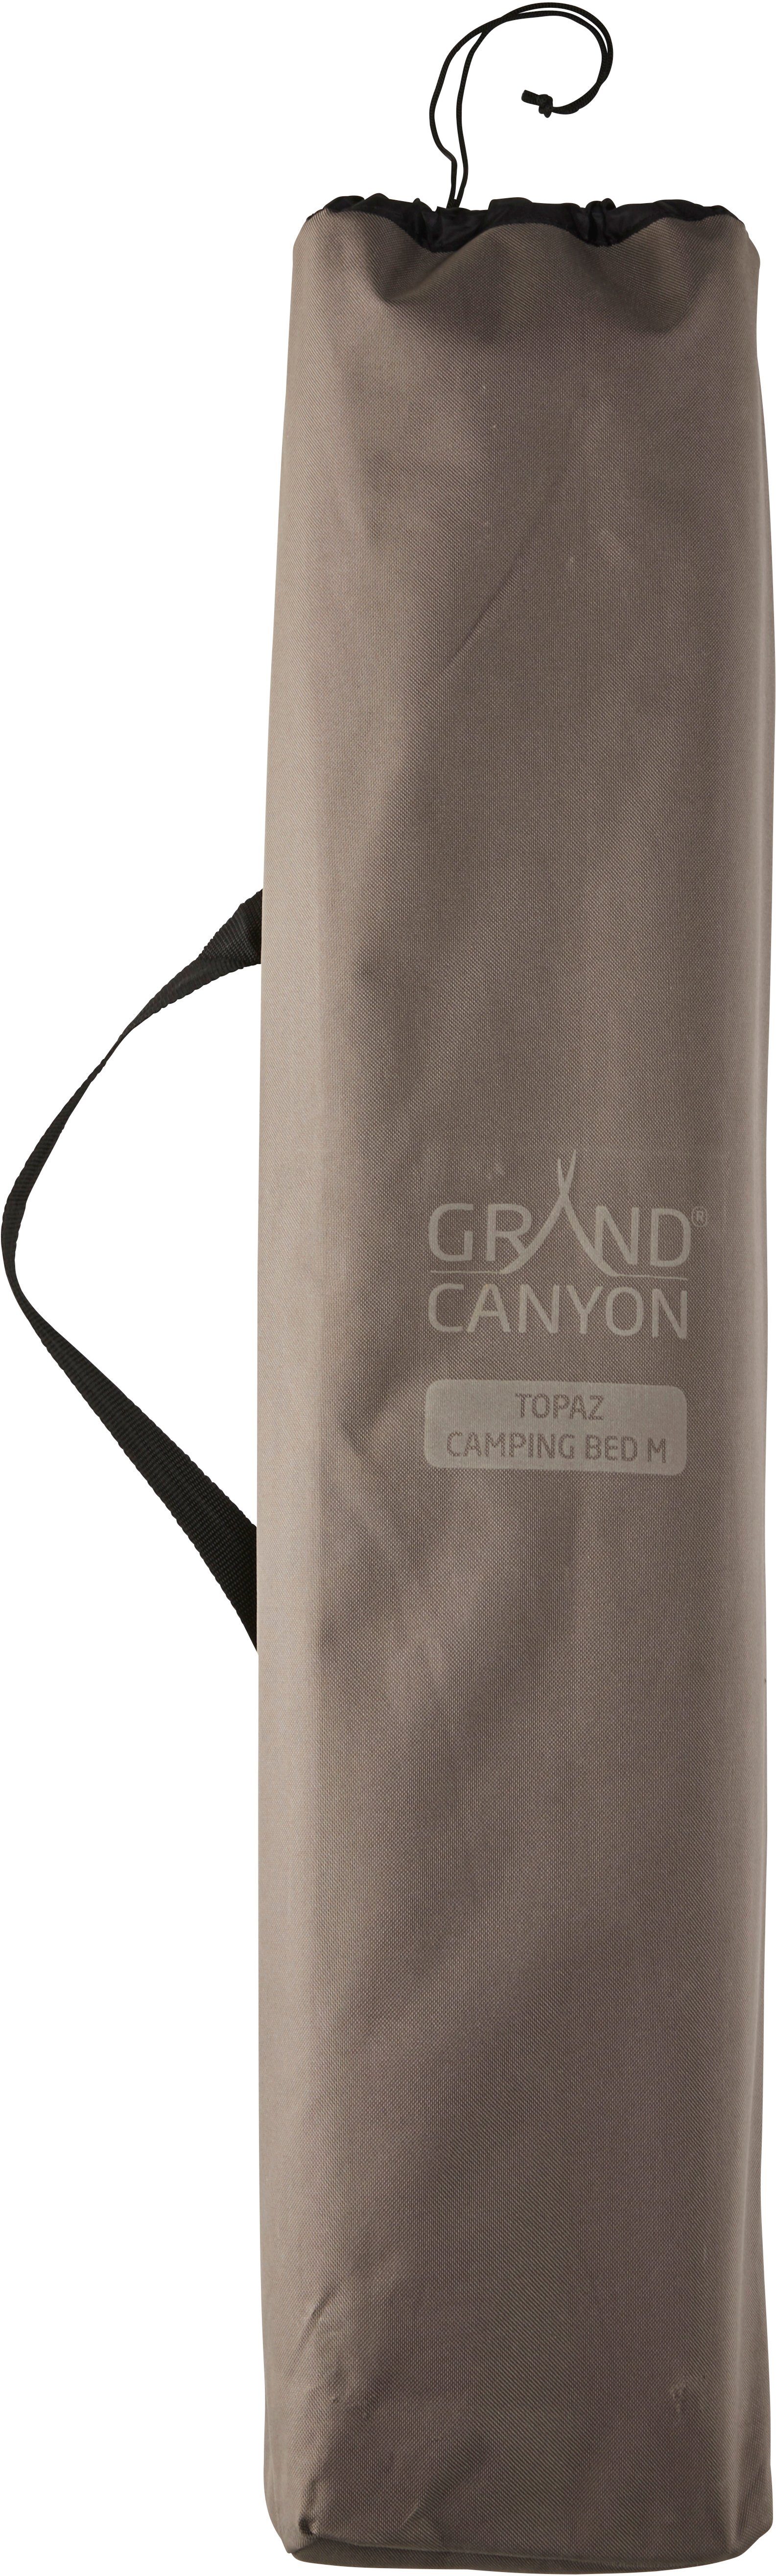 Feldbett TOPAZ GRAND grau CANYON CAMPING BED